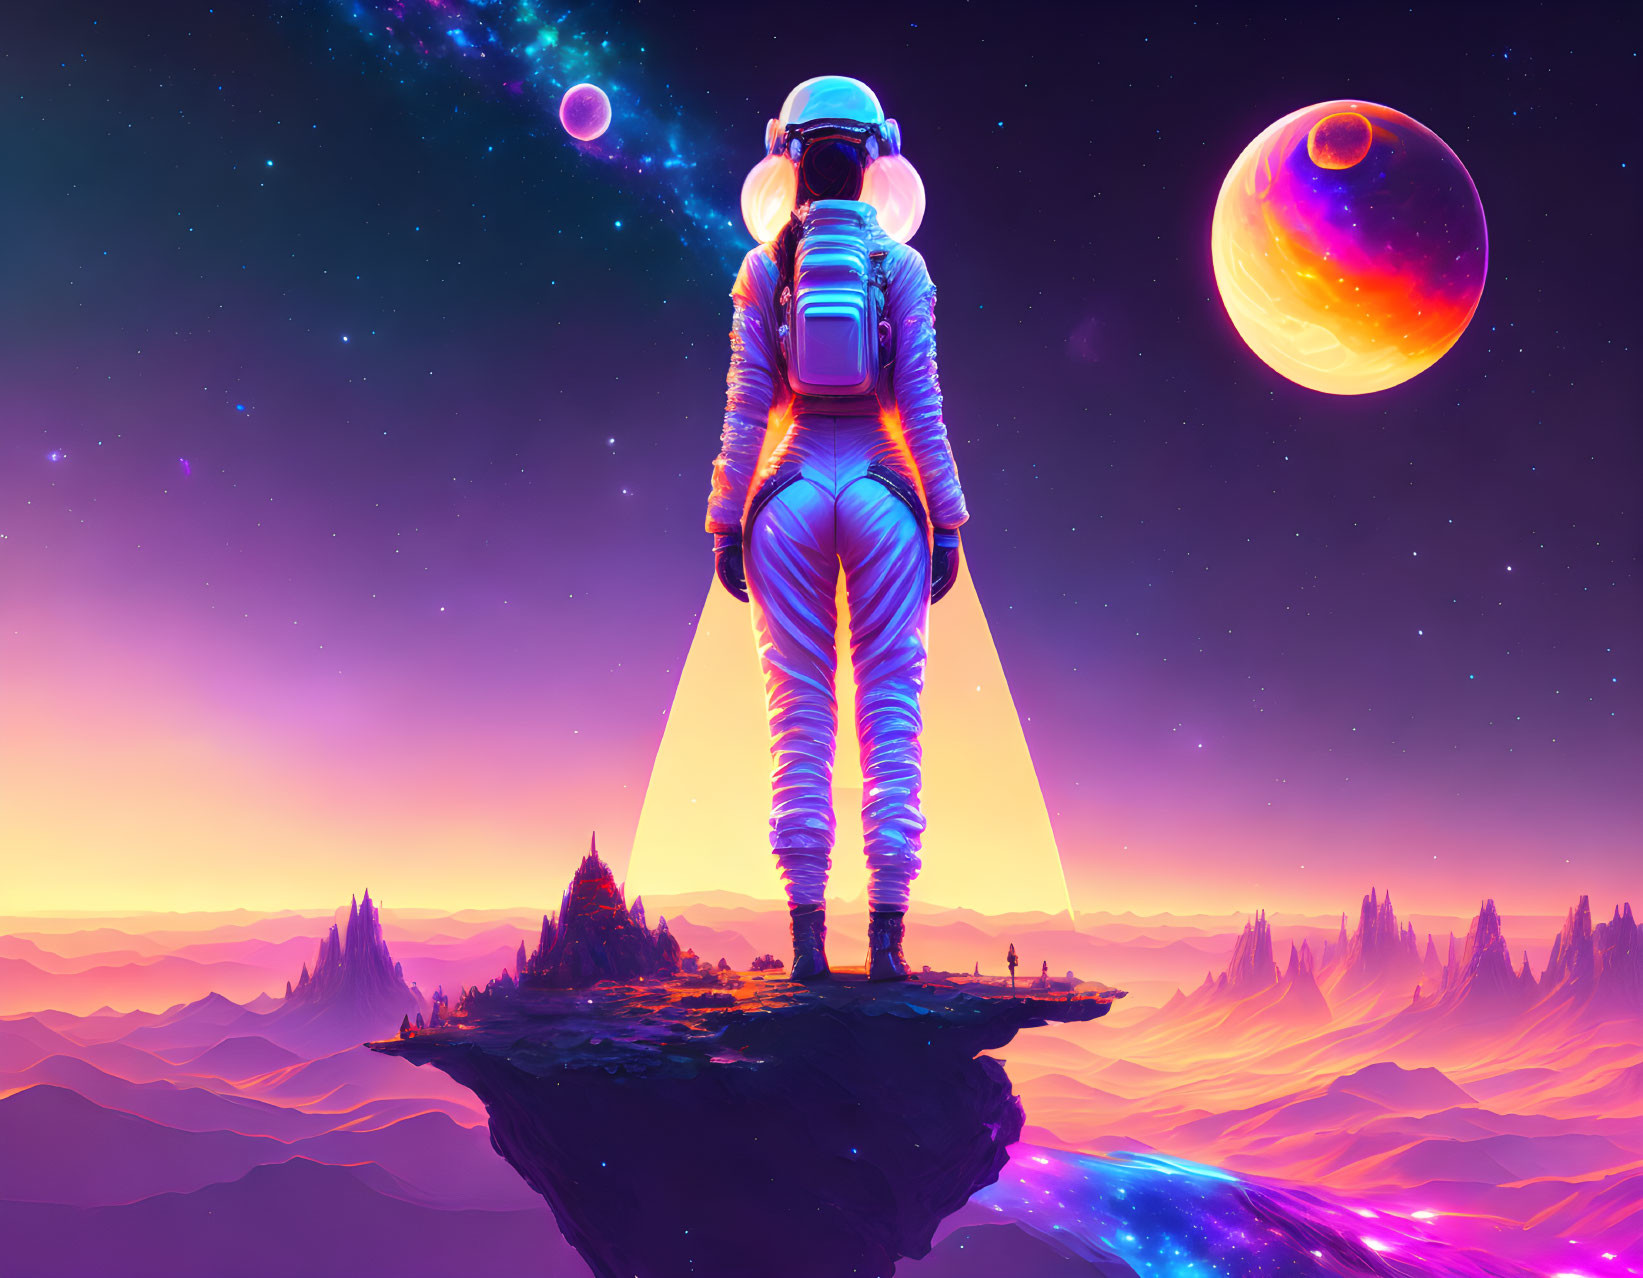 Astronaut on floating rock above purple alien landscape and starry sky